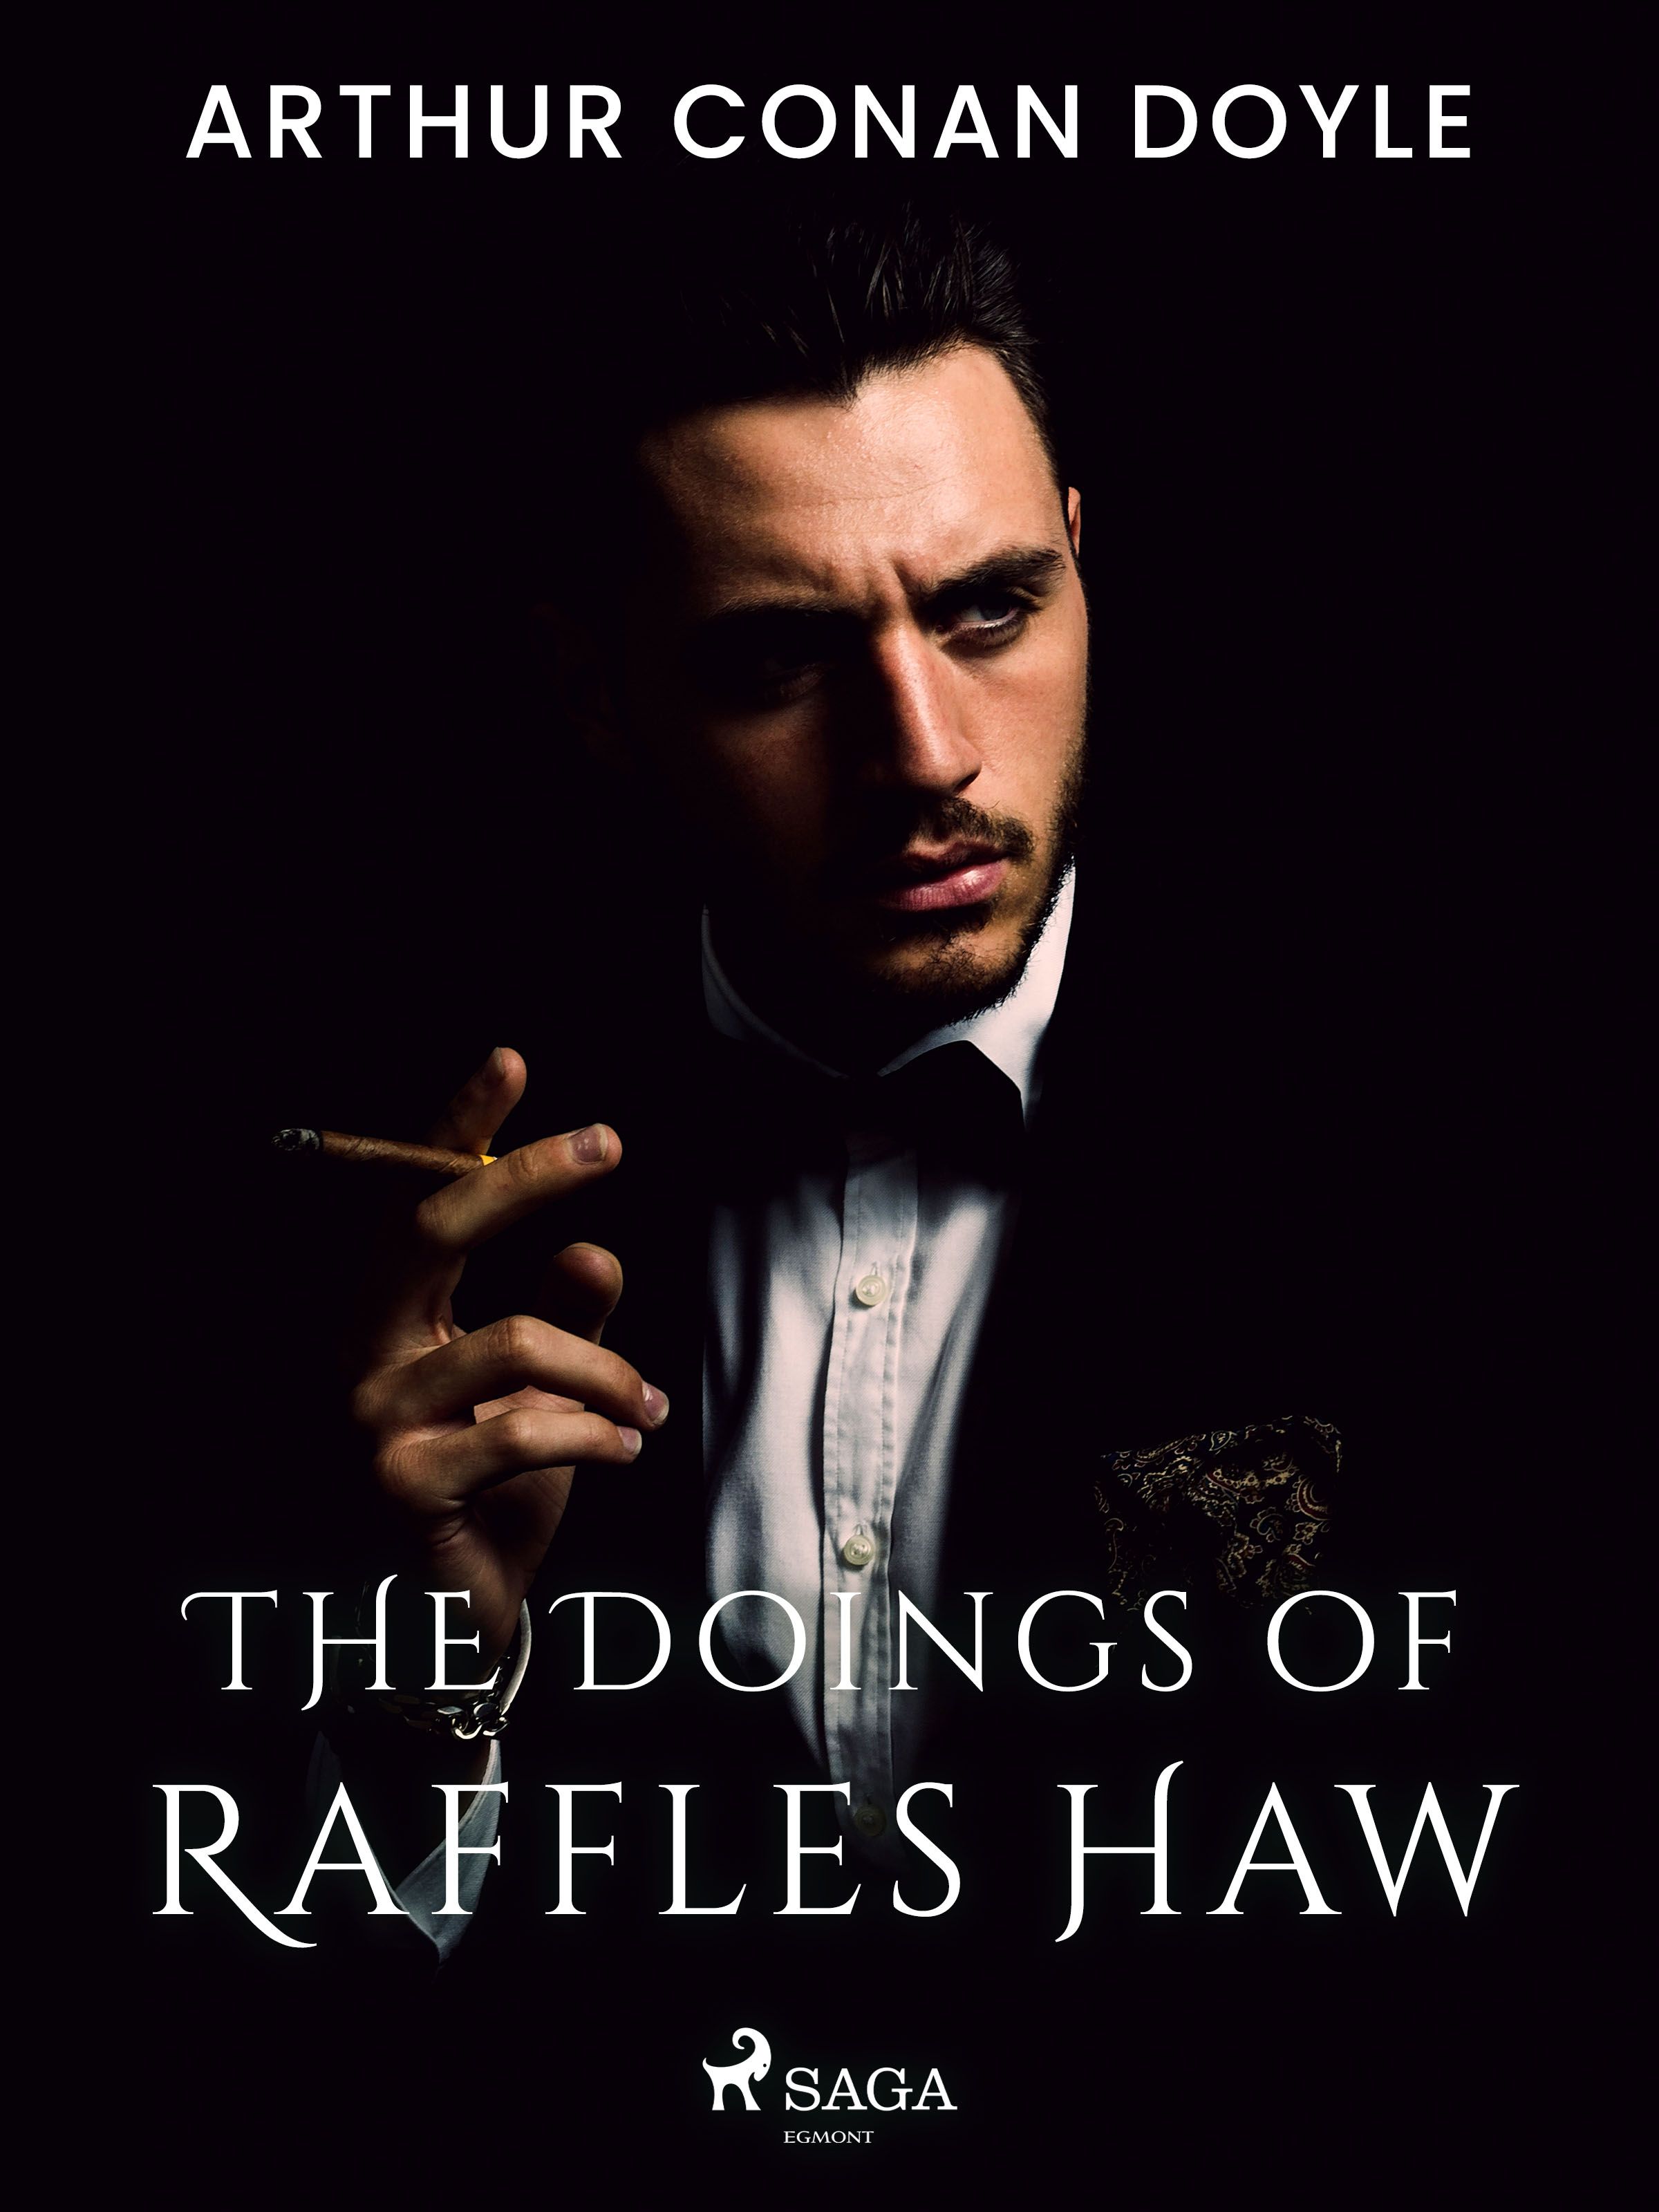 The Doings of Raffles Haw, e-bog af Arthur Conan Doyle